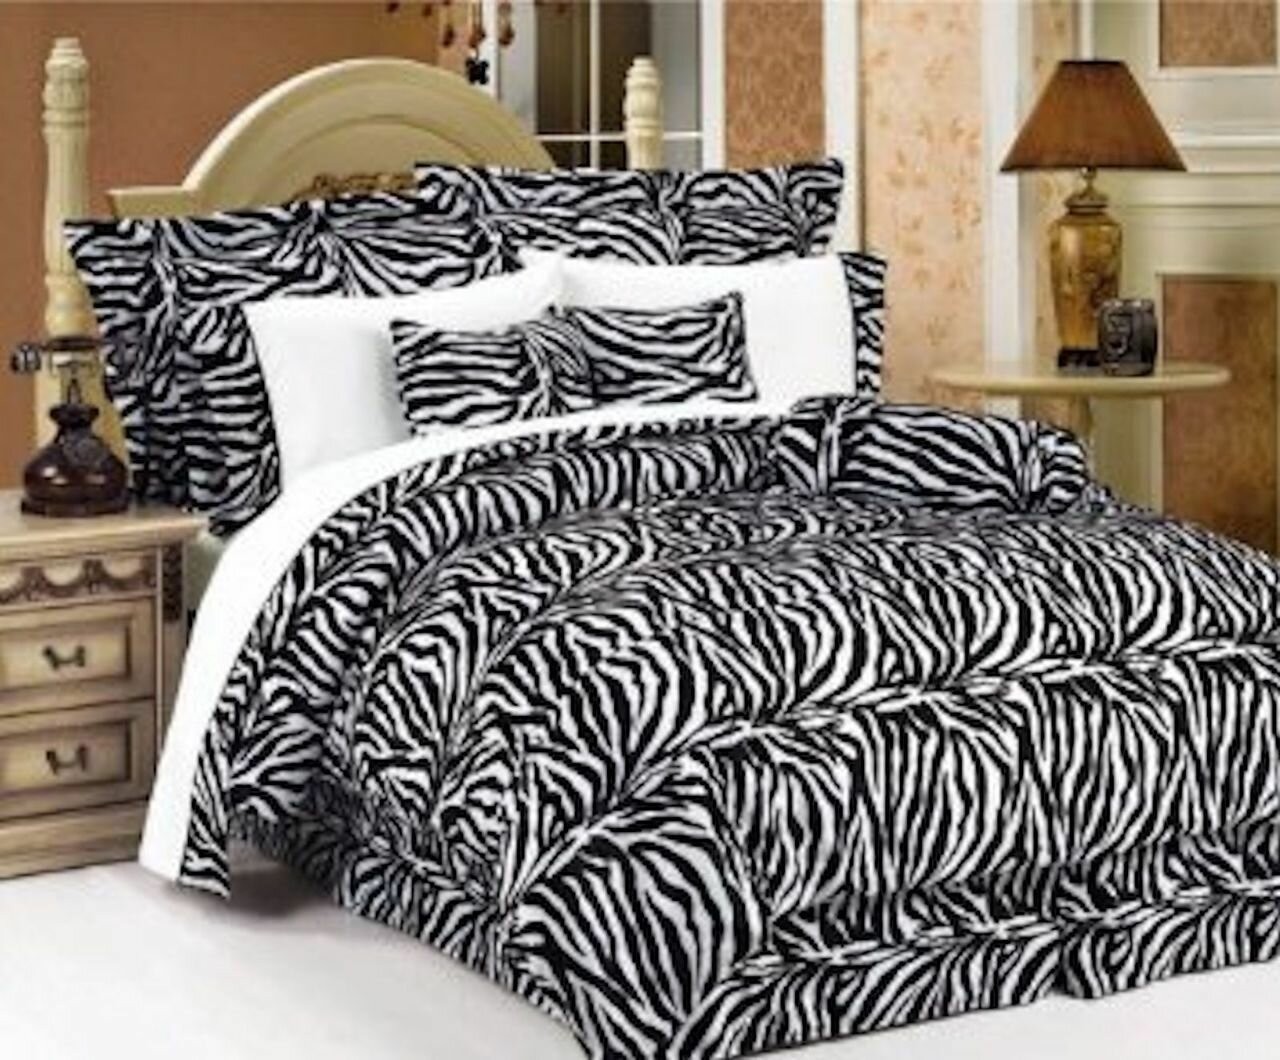 7Pcs Queen Zebra Animal Kingdom Bedding Comforter Set